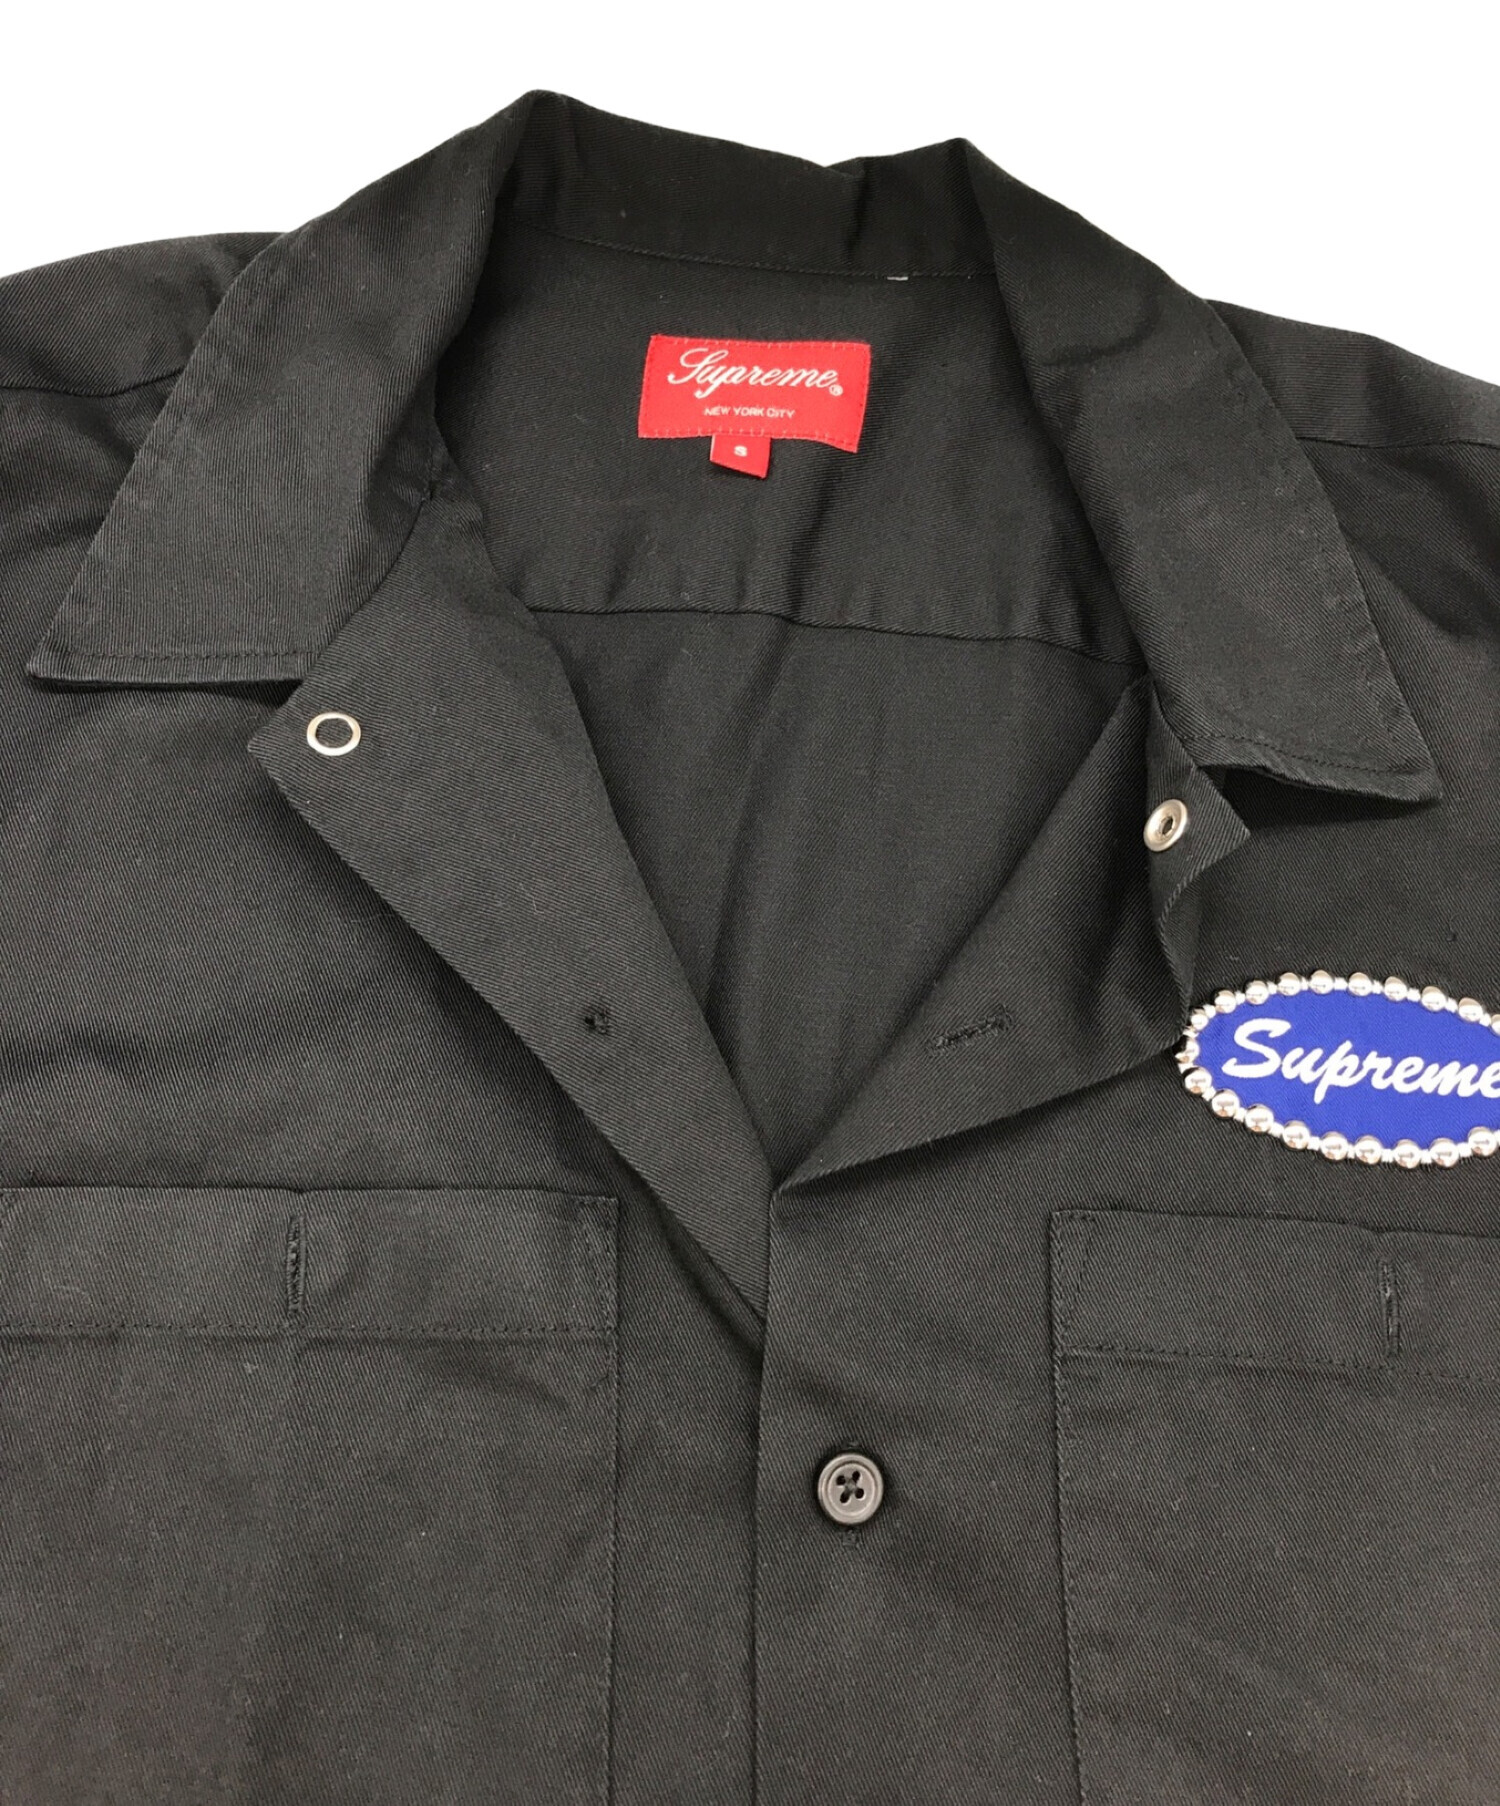 supremeSupreme Studded Patch S/S Work Shirt